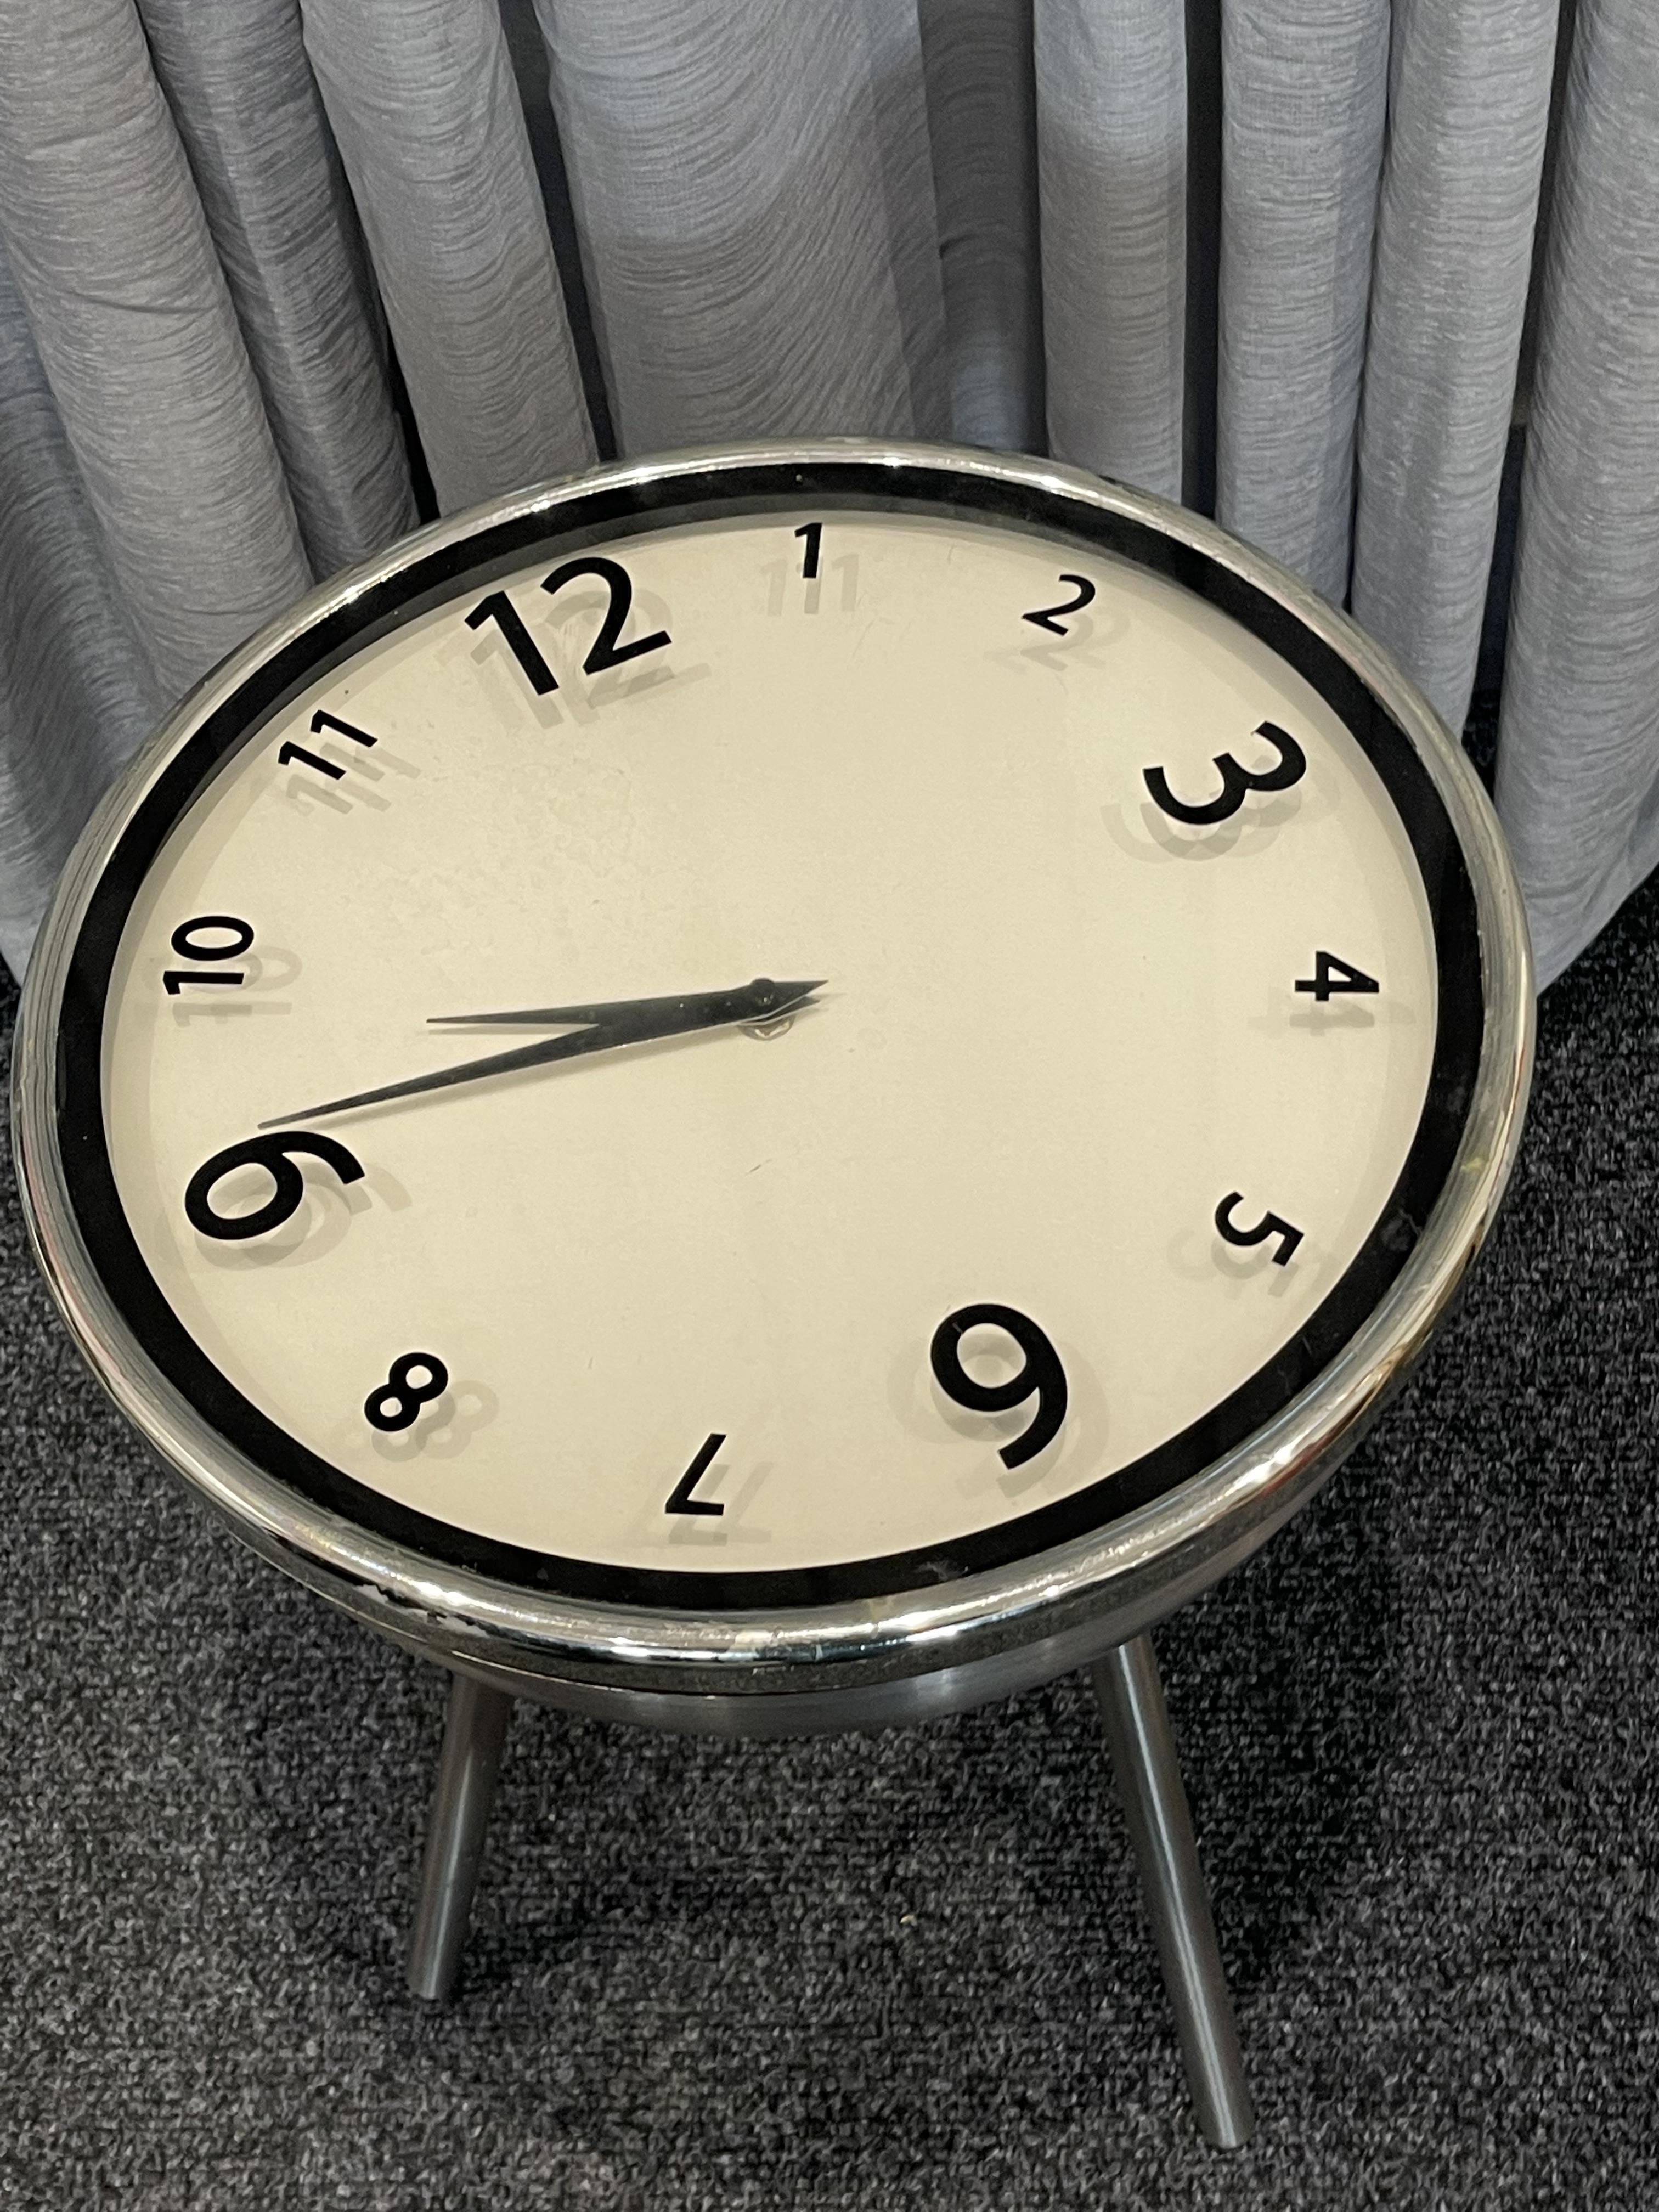 Retro Tri Leg Vintage Chrome Table Clock - Image 3 of 7